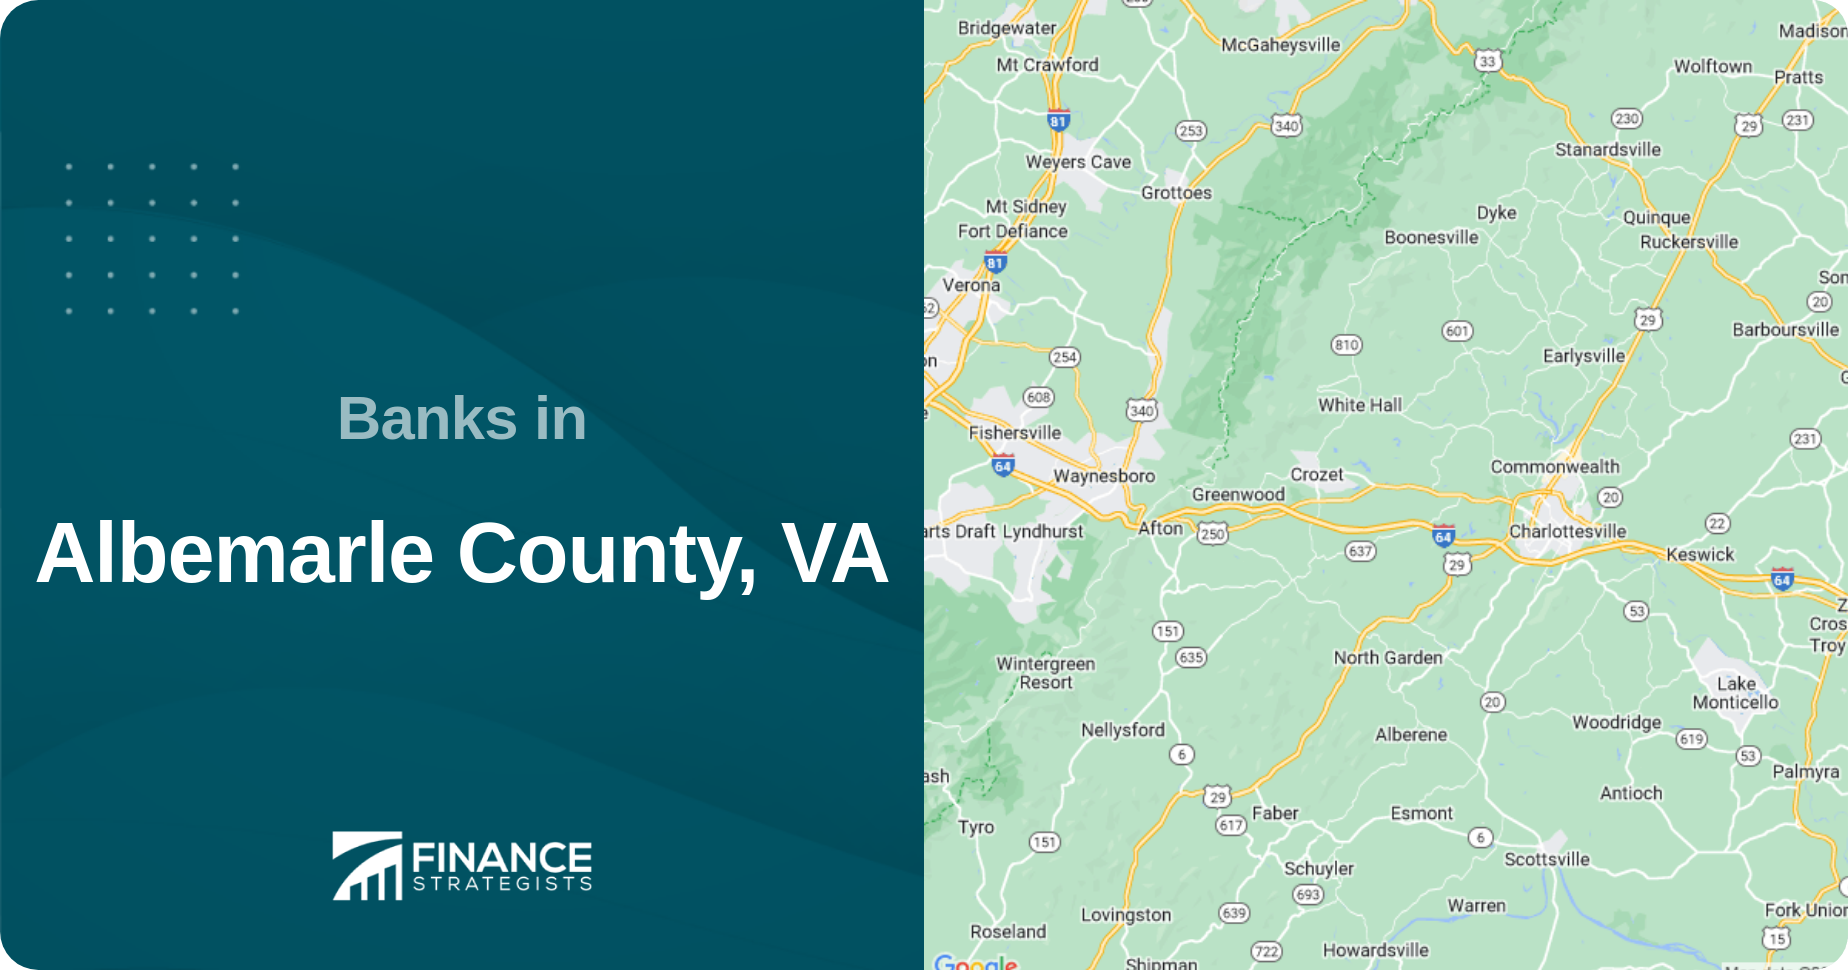 Banks in Albemarle County, VA